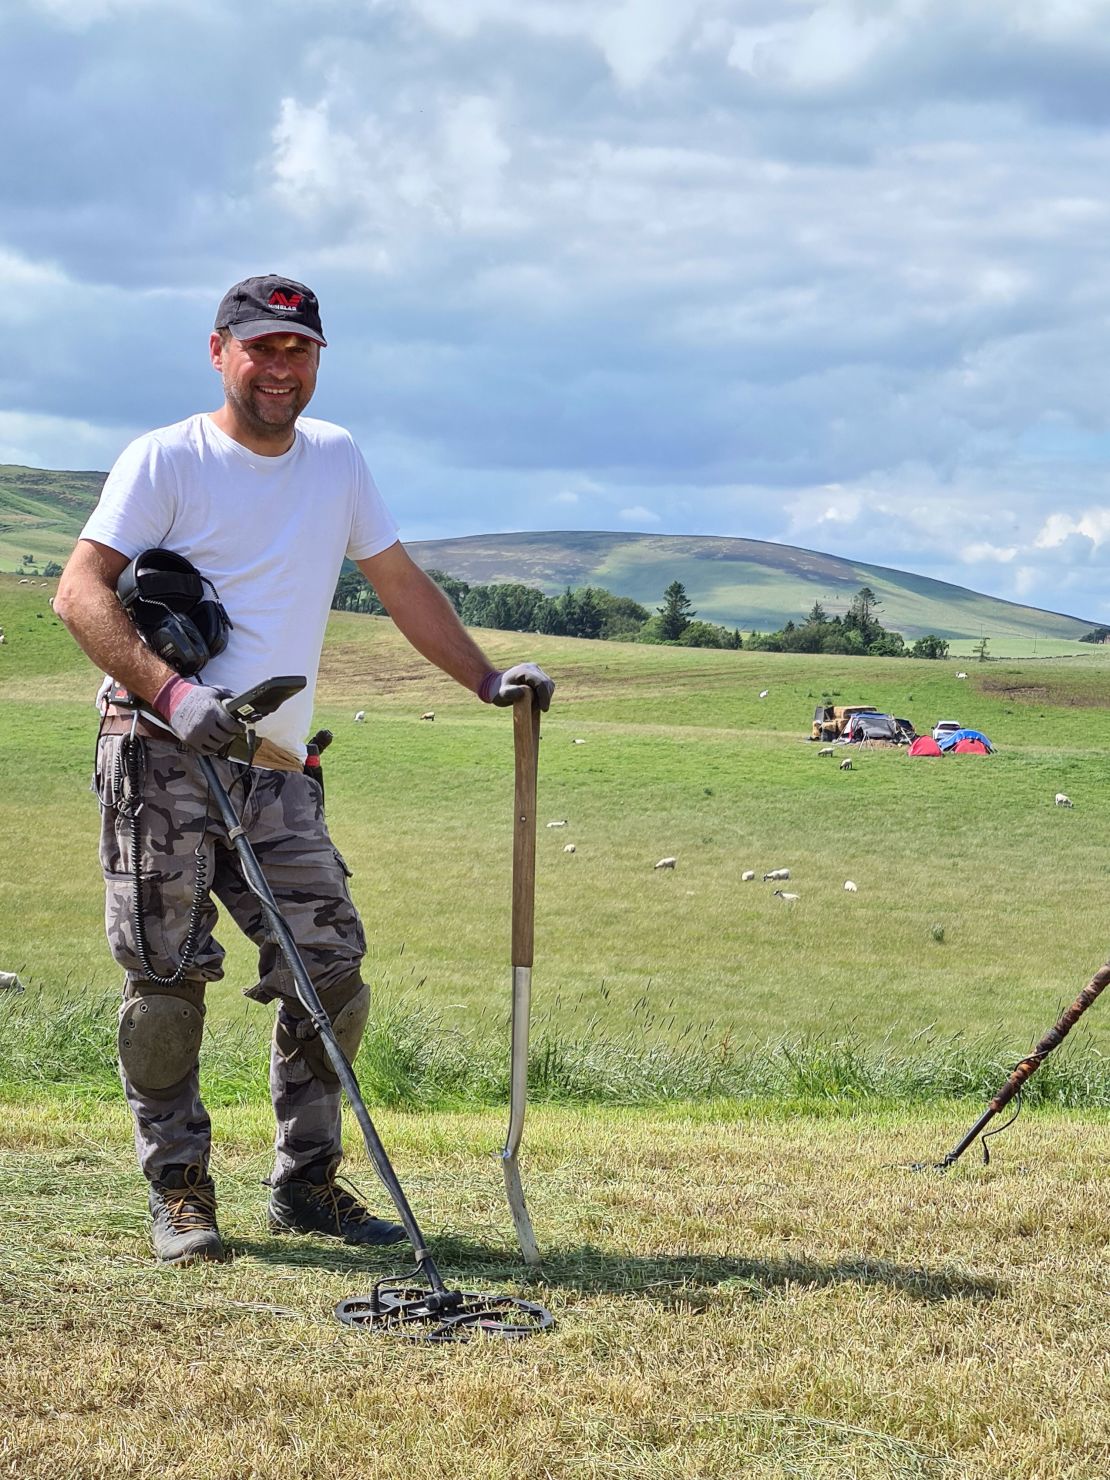 Mariusz Stepien made the rare discovery at a site near Peebles, Scotland.